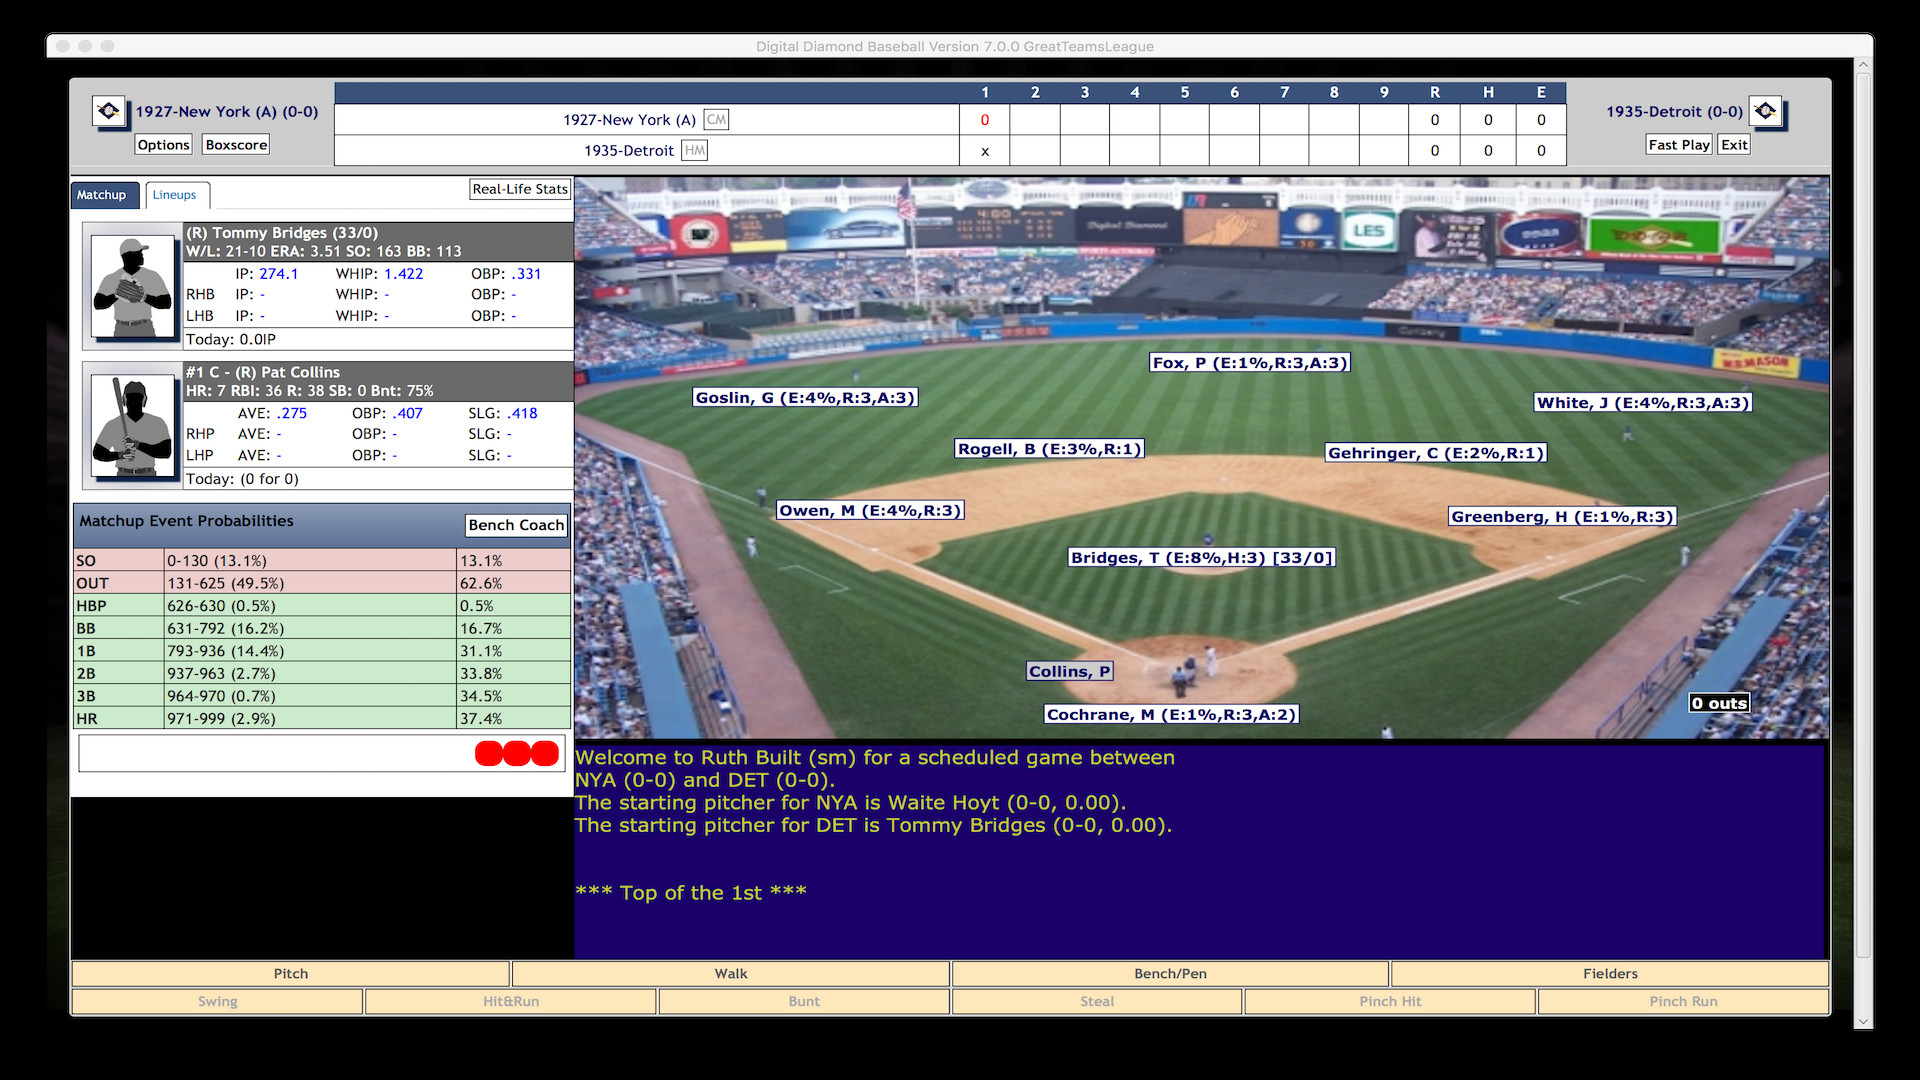 Digital Diamond Baseball V7 screenshot